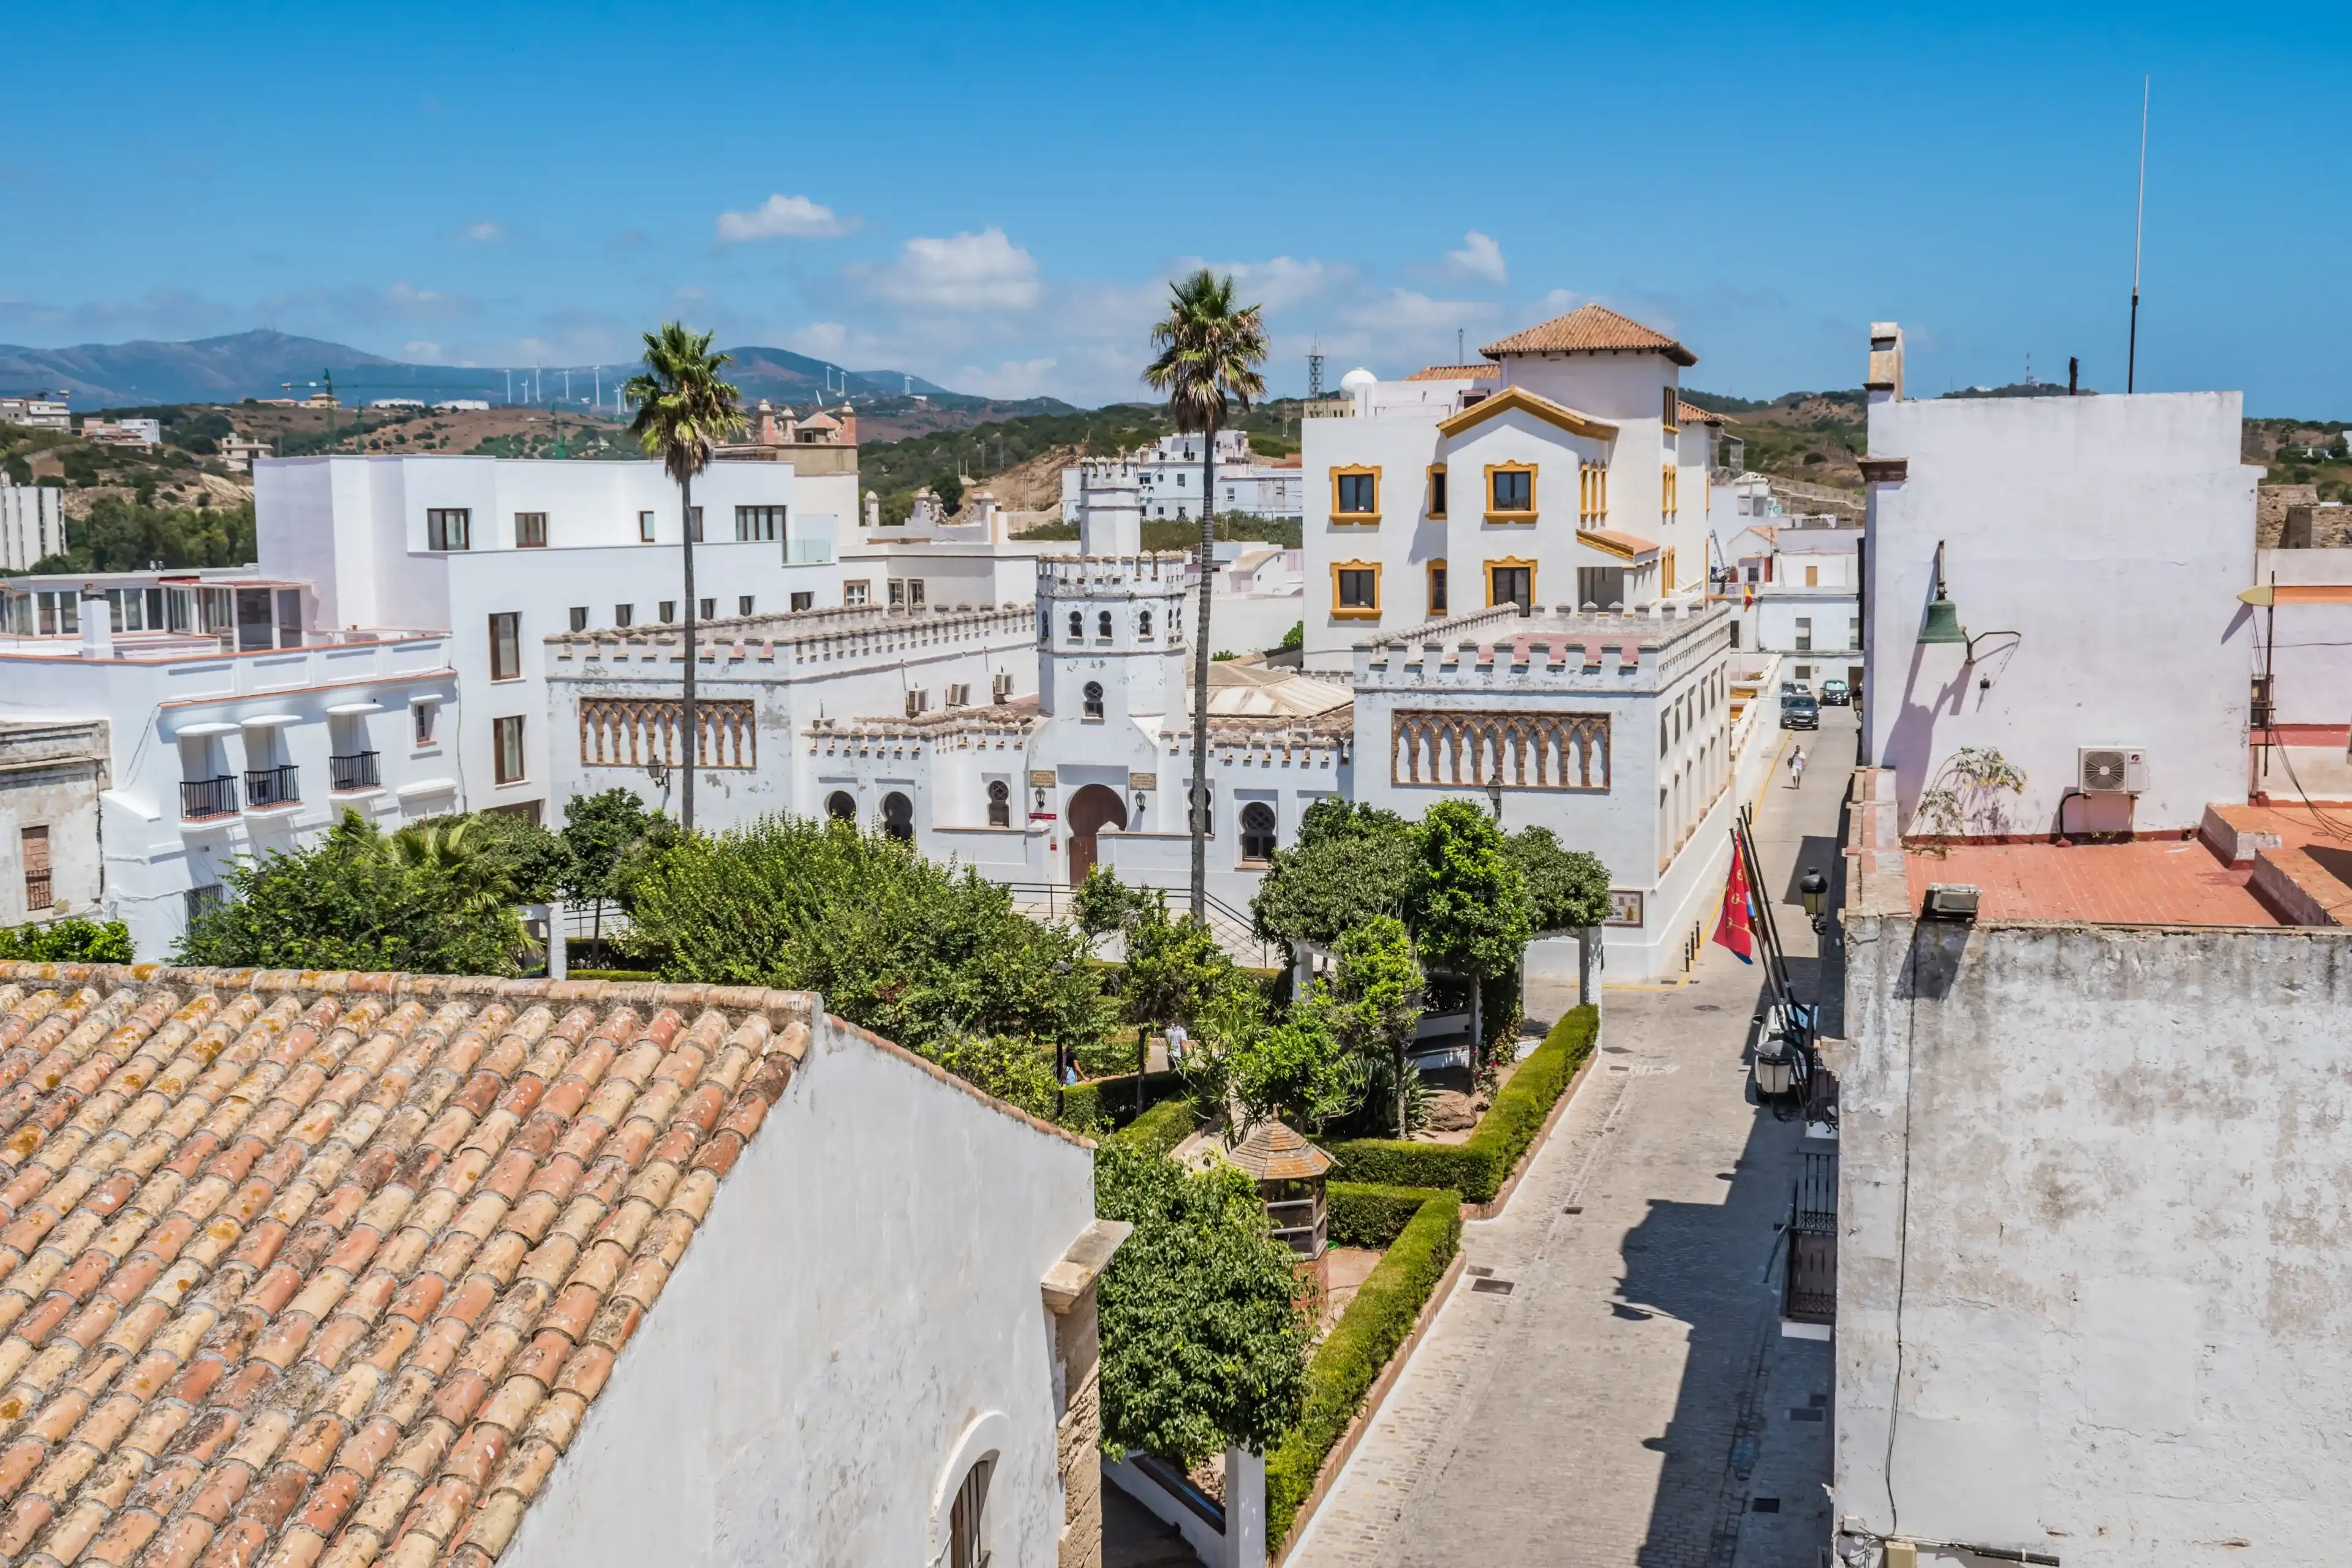 Best Tarifa hotels. Cheap hotels in Tarifa, Spain